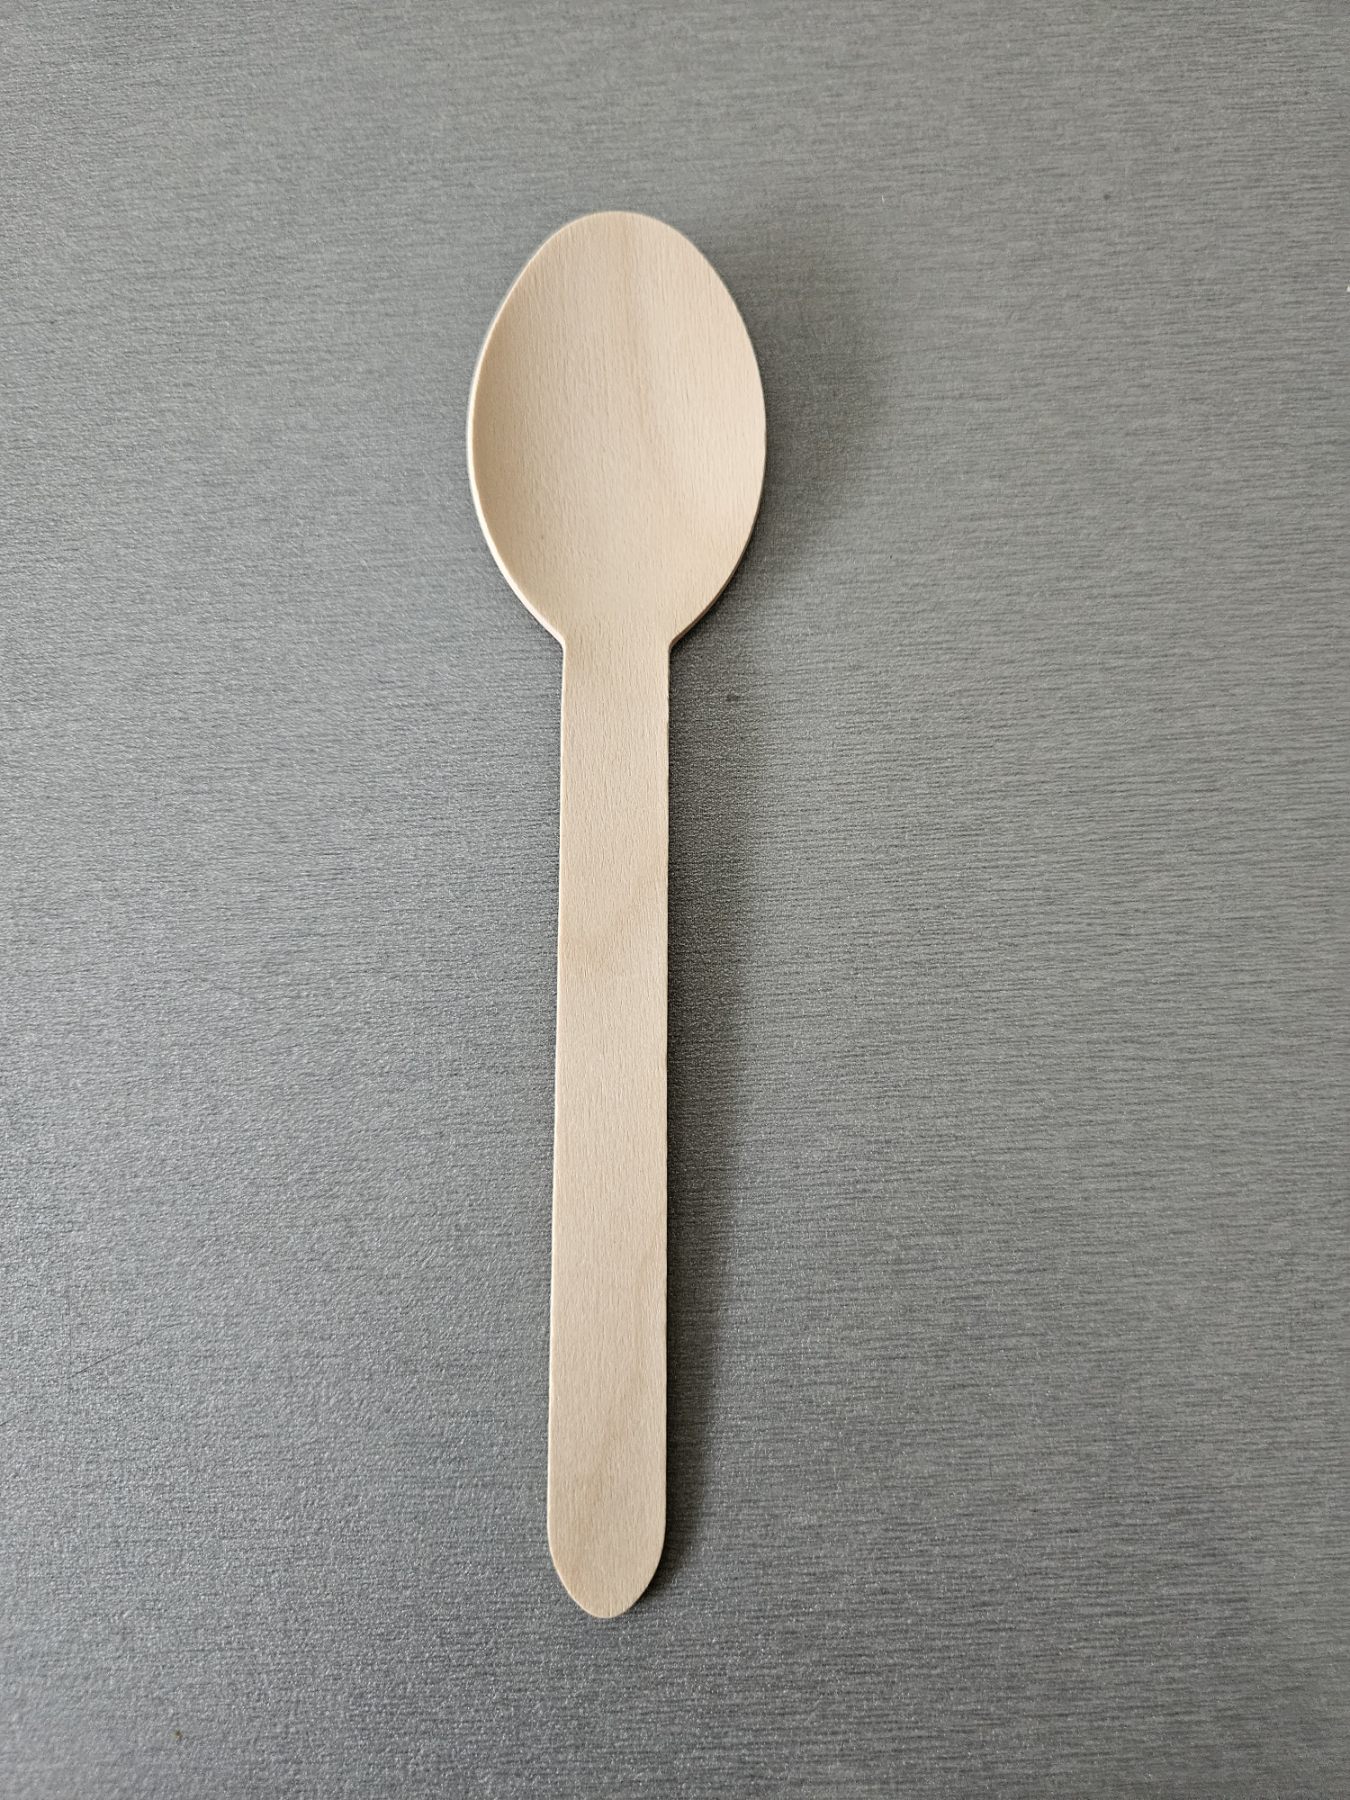 Bragio Plastics - Wooden spoon